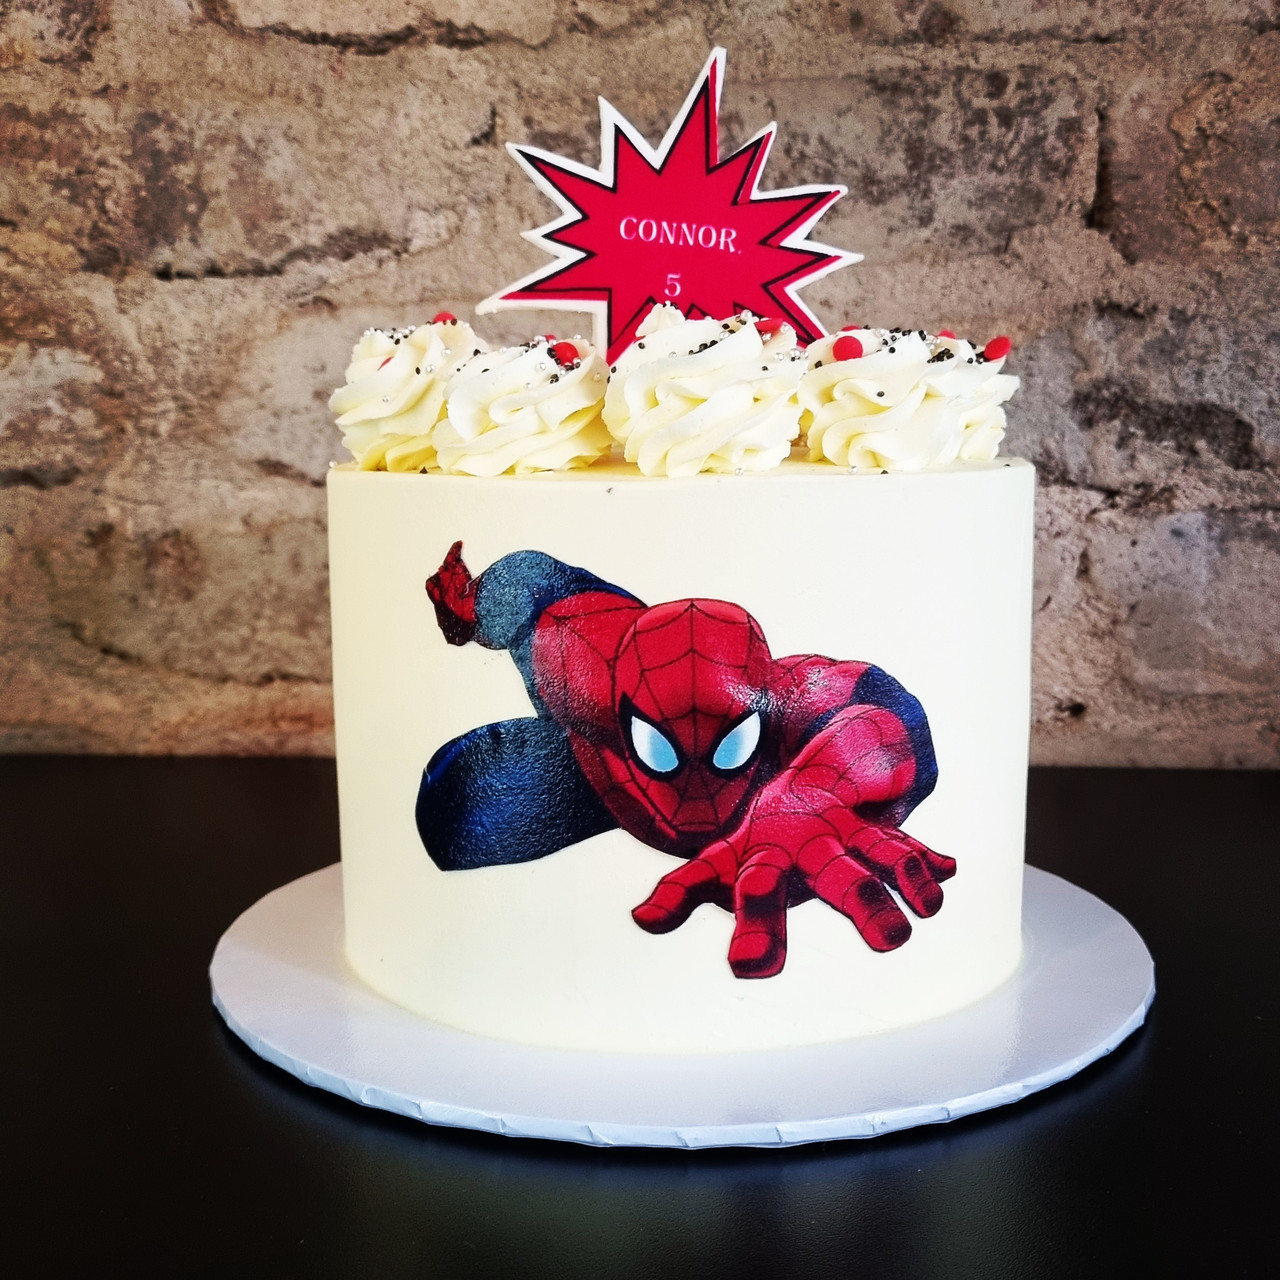 The EASIEST Spiderman cake design | Spiderman cake decorating tutorial |  Buttercream frosting - YouTube